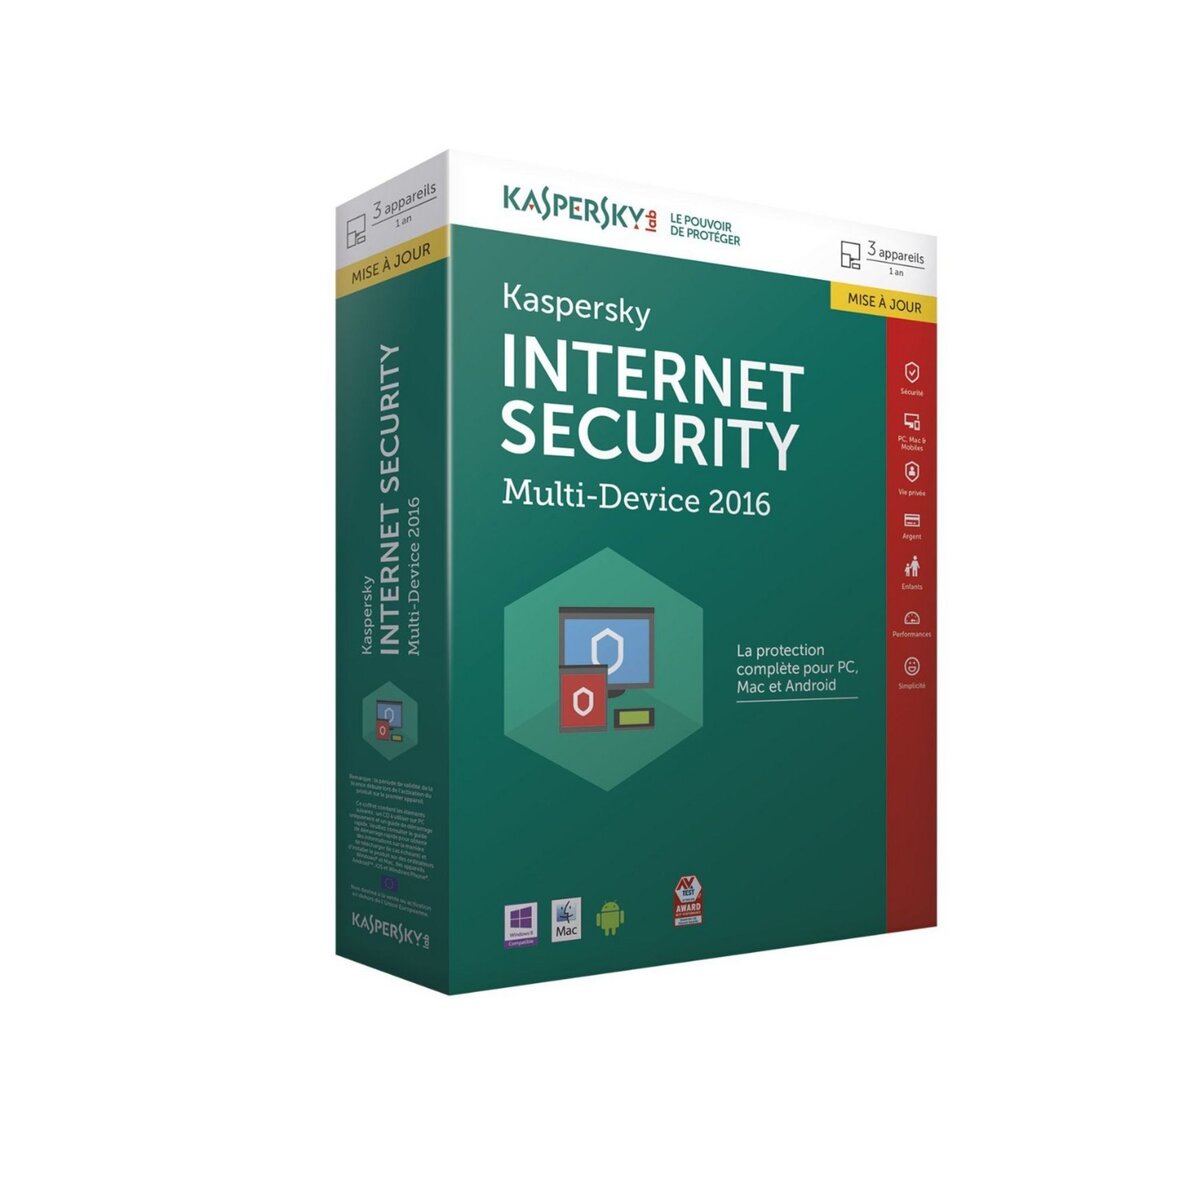 Kaspersky Internet Security 2016 - mise à jour